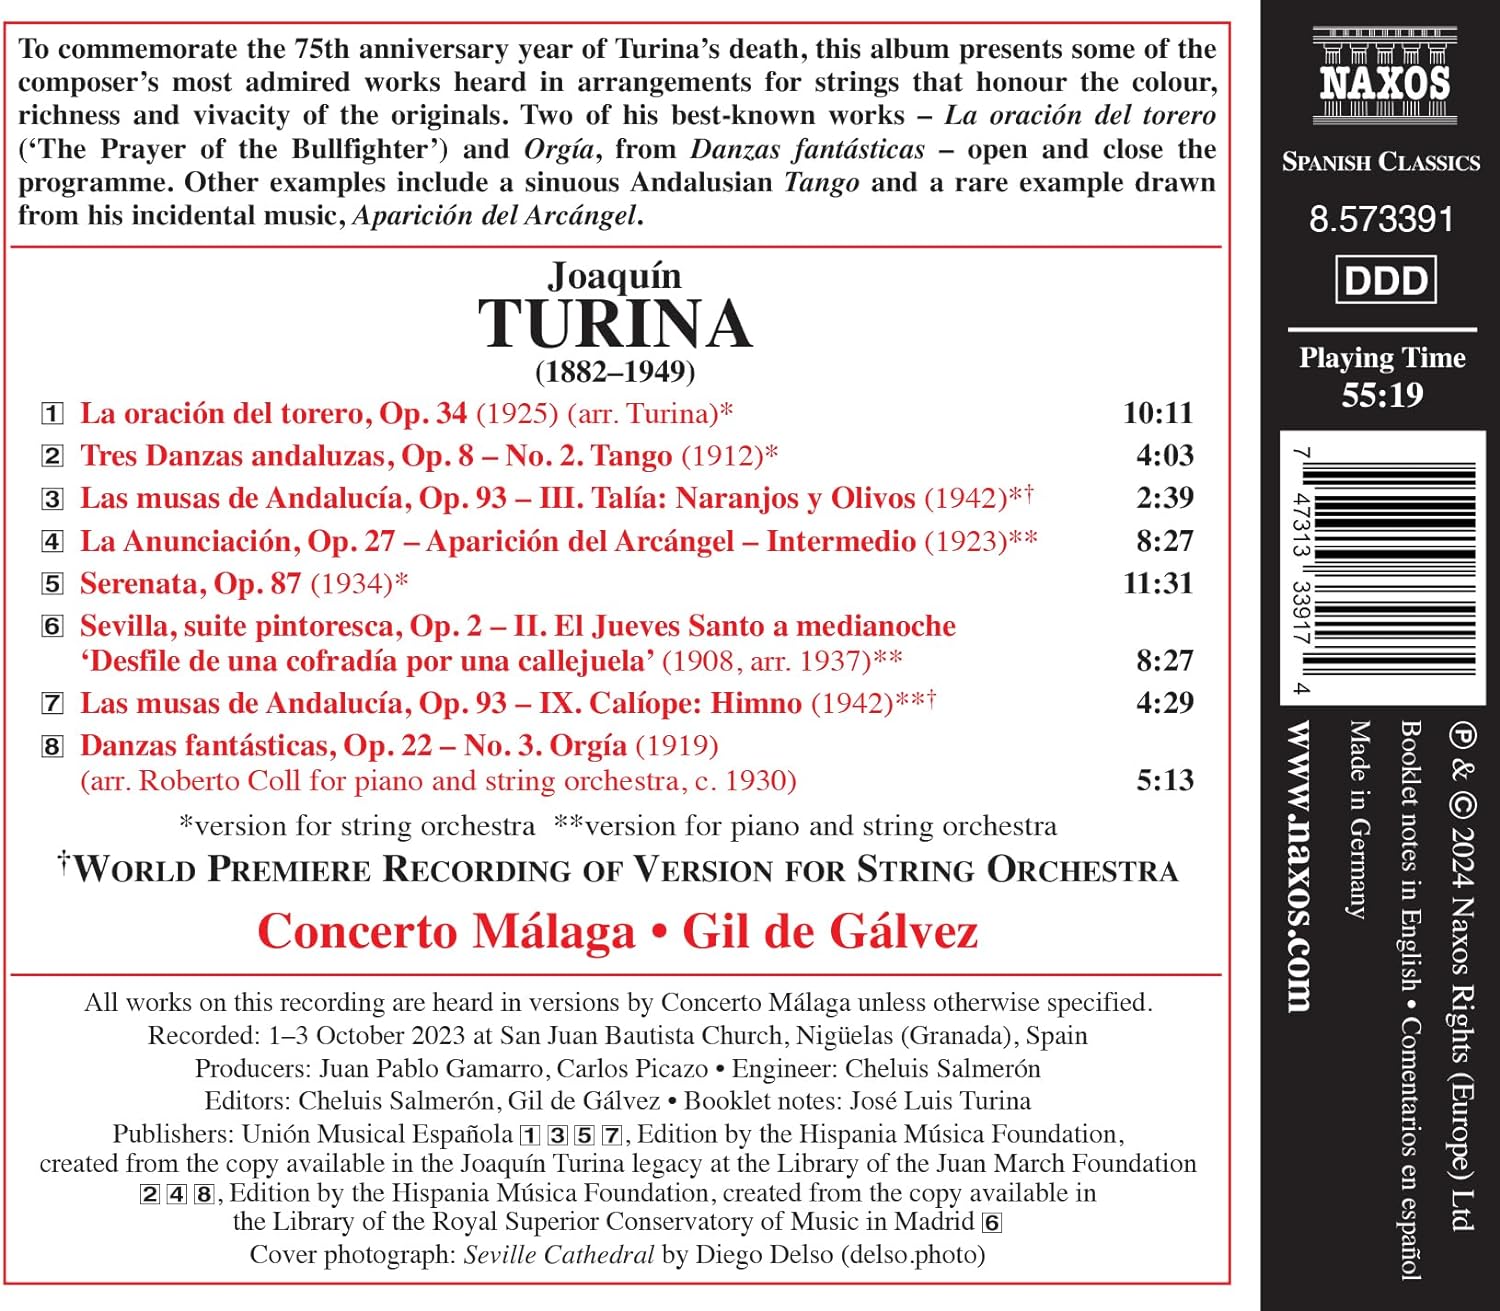 Gil de Galvez 투리나: 현악 오케스트라를 위한 작품집 (Turina: Works For Strings)